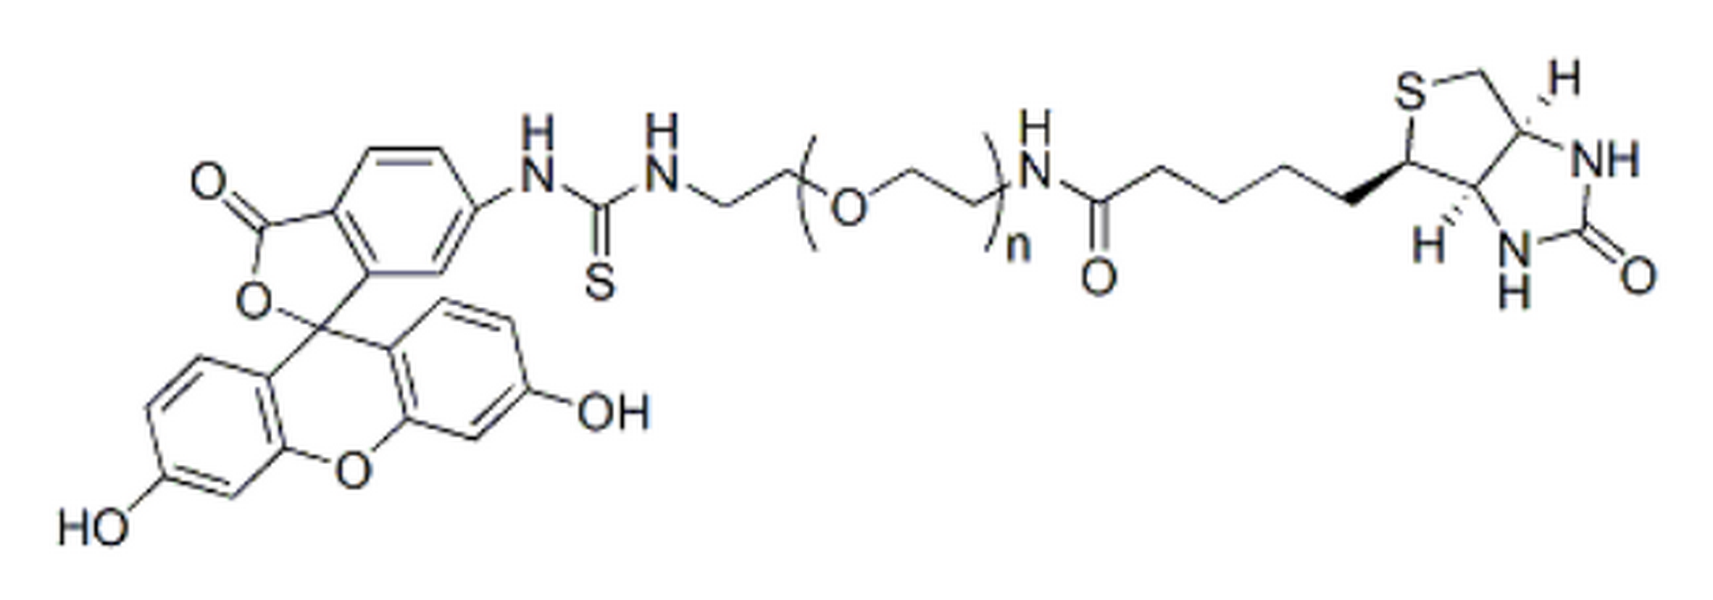 Fluorescein-PEG-Biotin, MW 5K